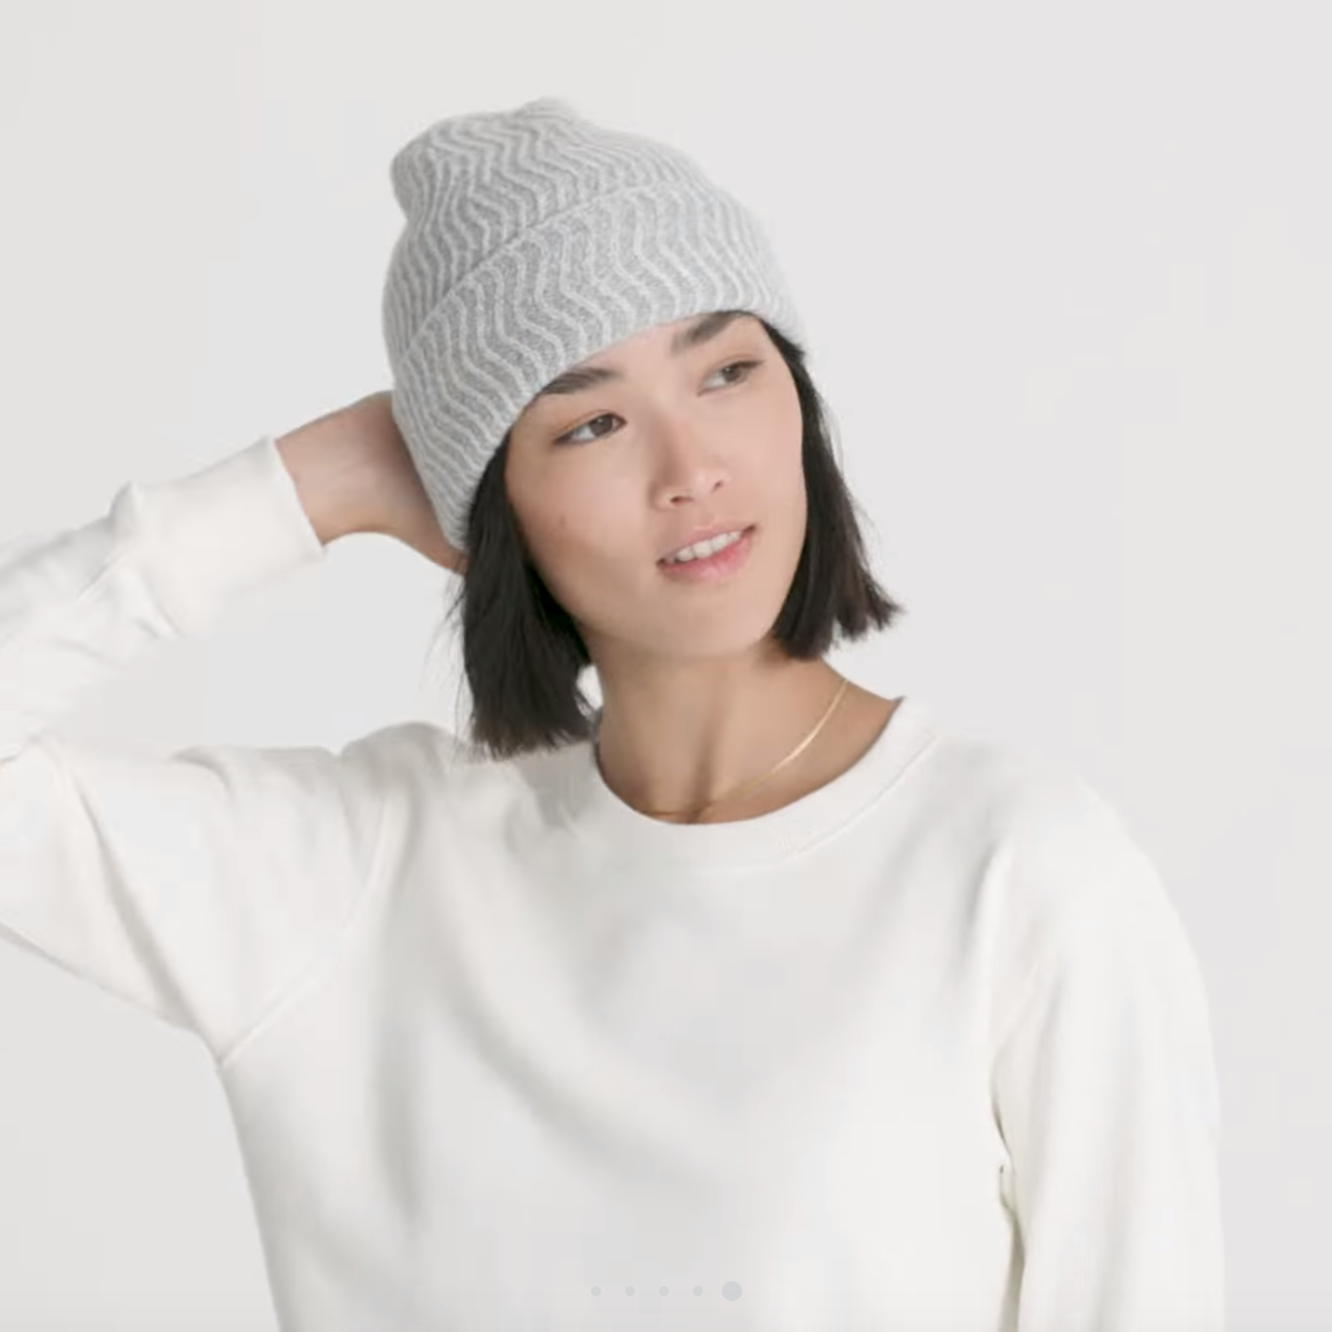 teller Kers correct 30 Best Warm Winter Hats for Women in 2021 - Stylish, Cozy Beanies